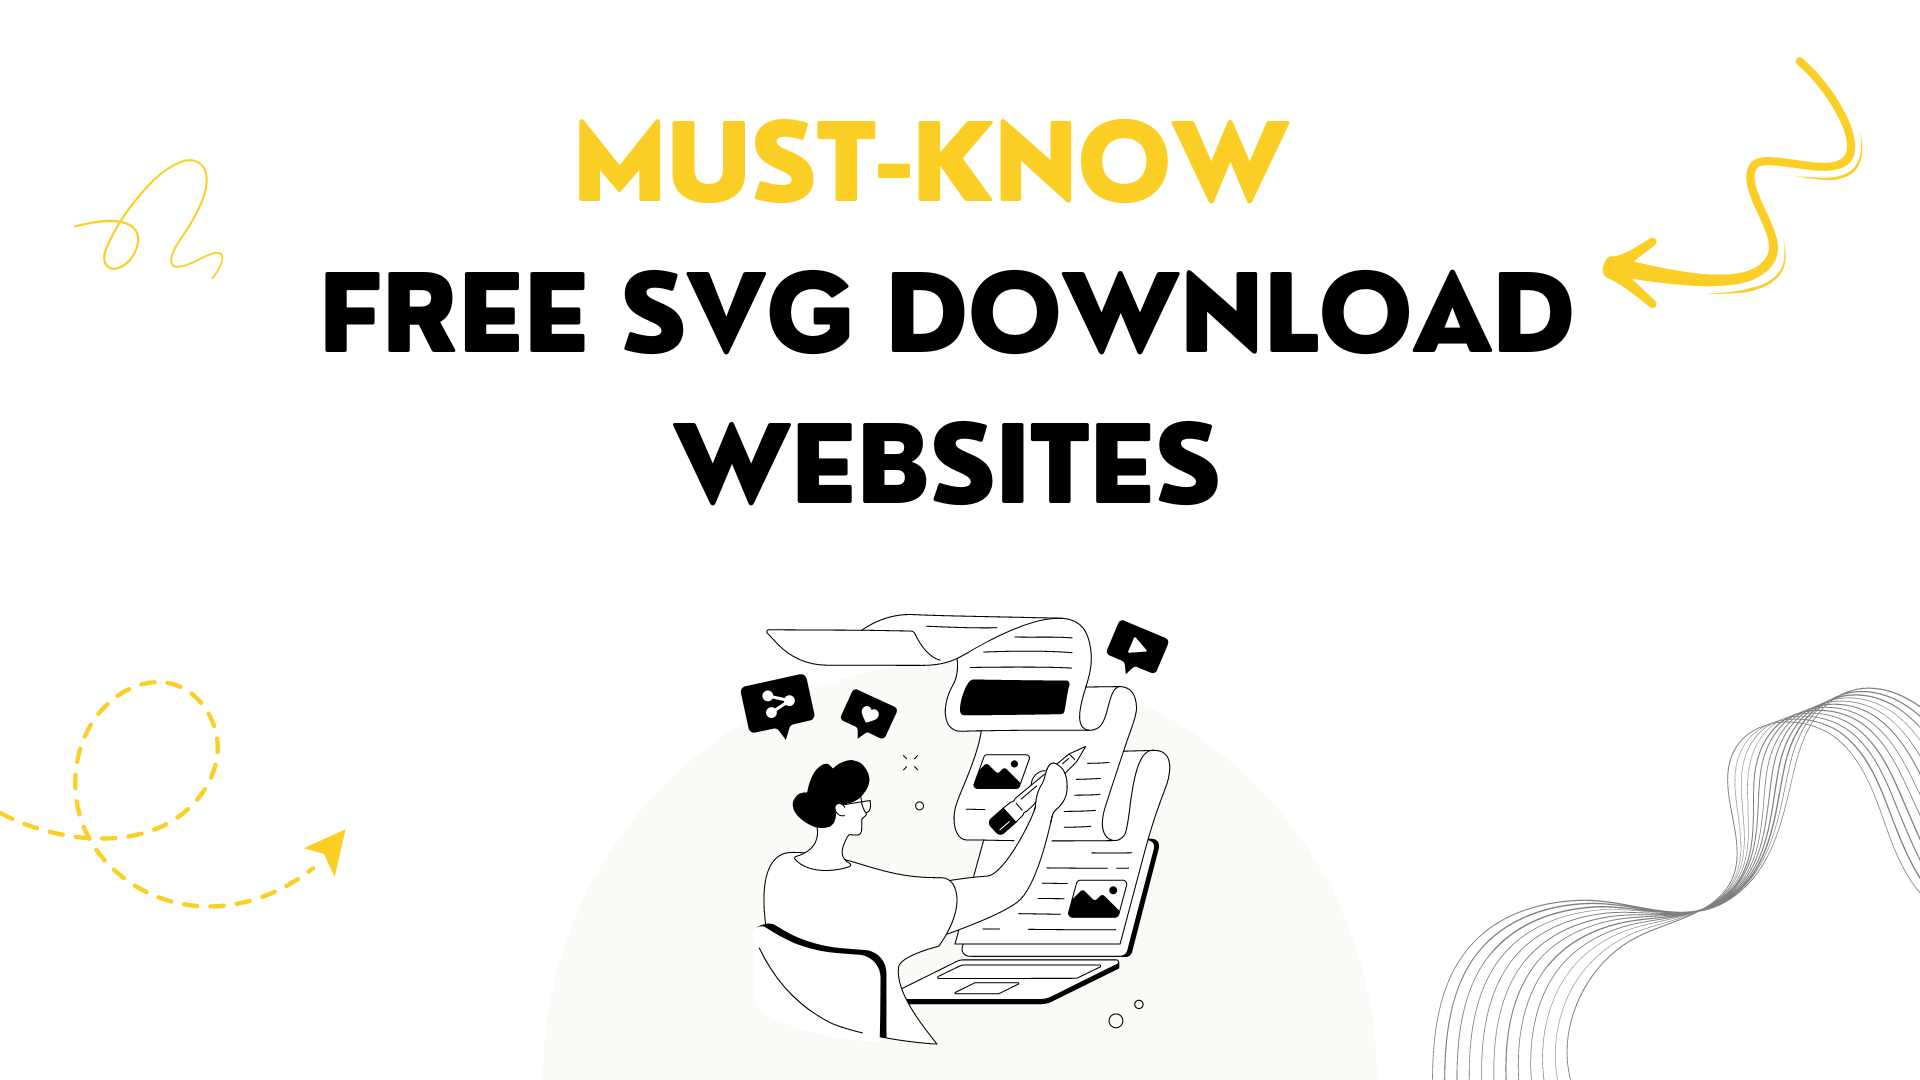 Must-Know Free SVG Download Websites